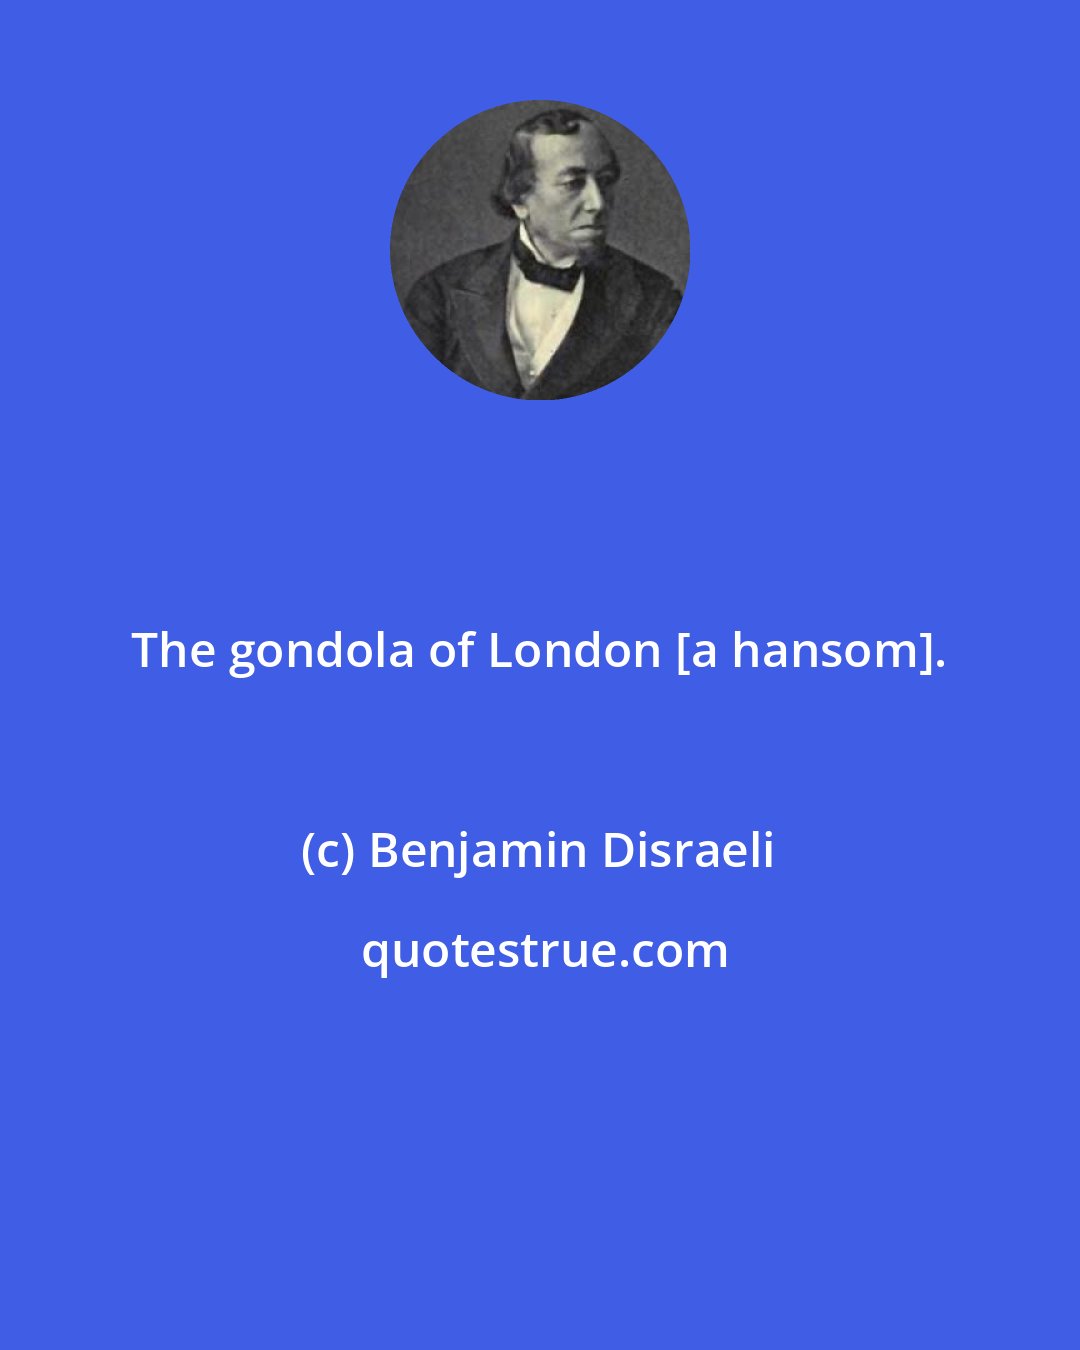 Benjamin Disraeli: The gondola of London [a hansom].